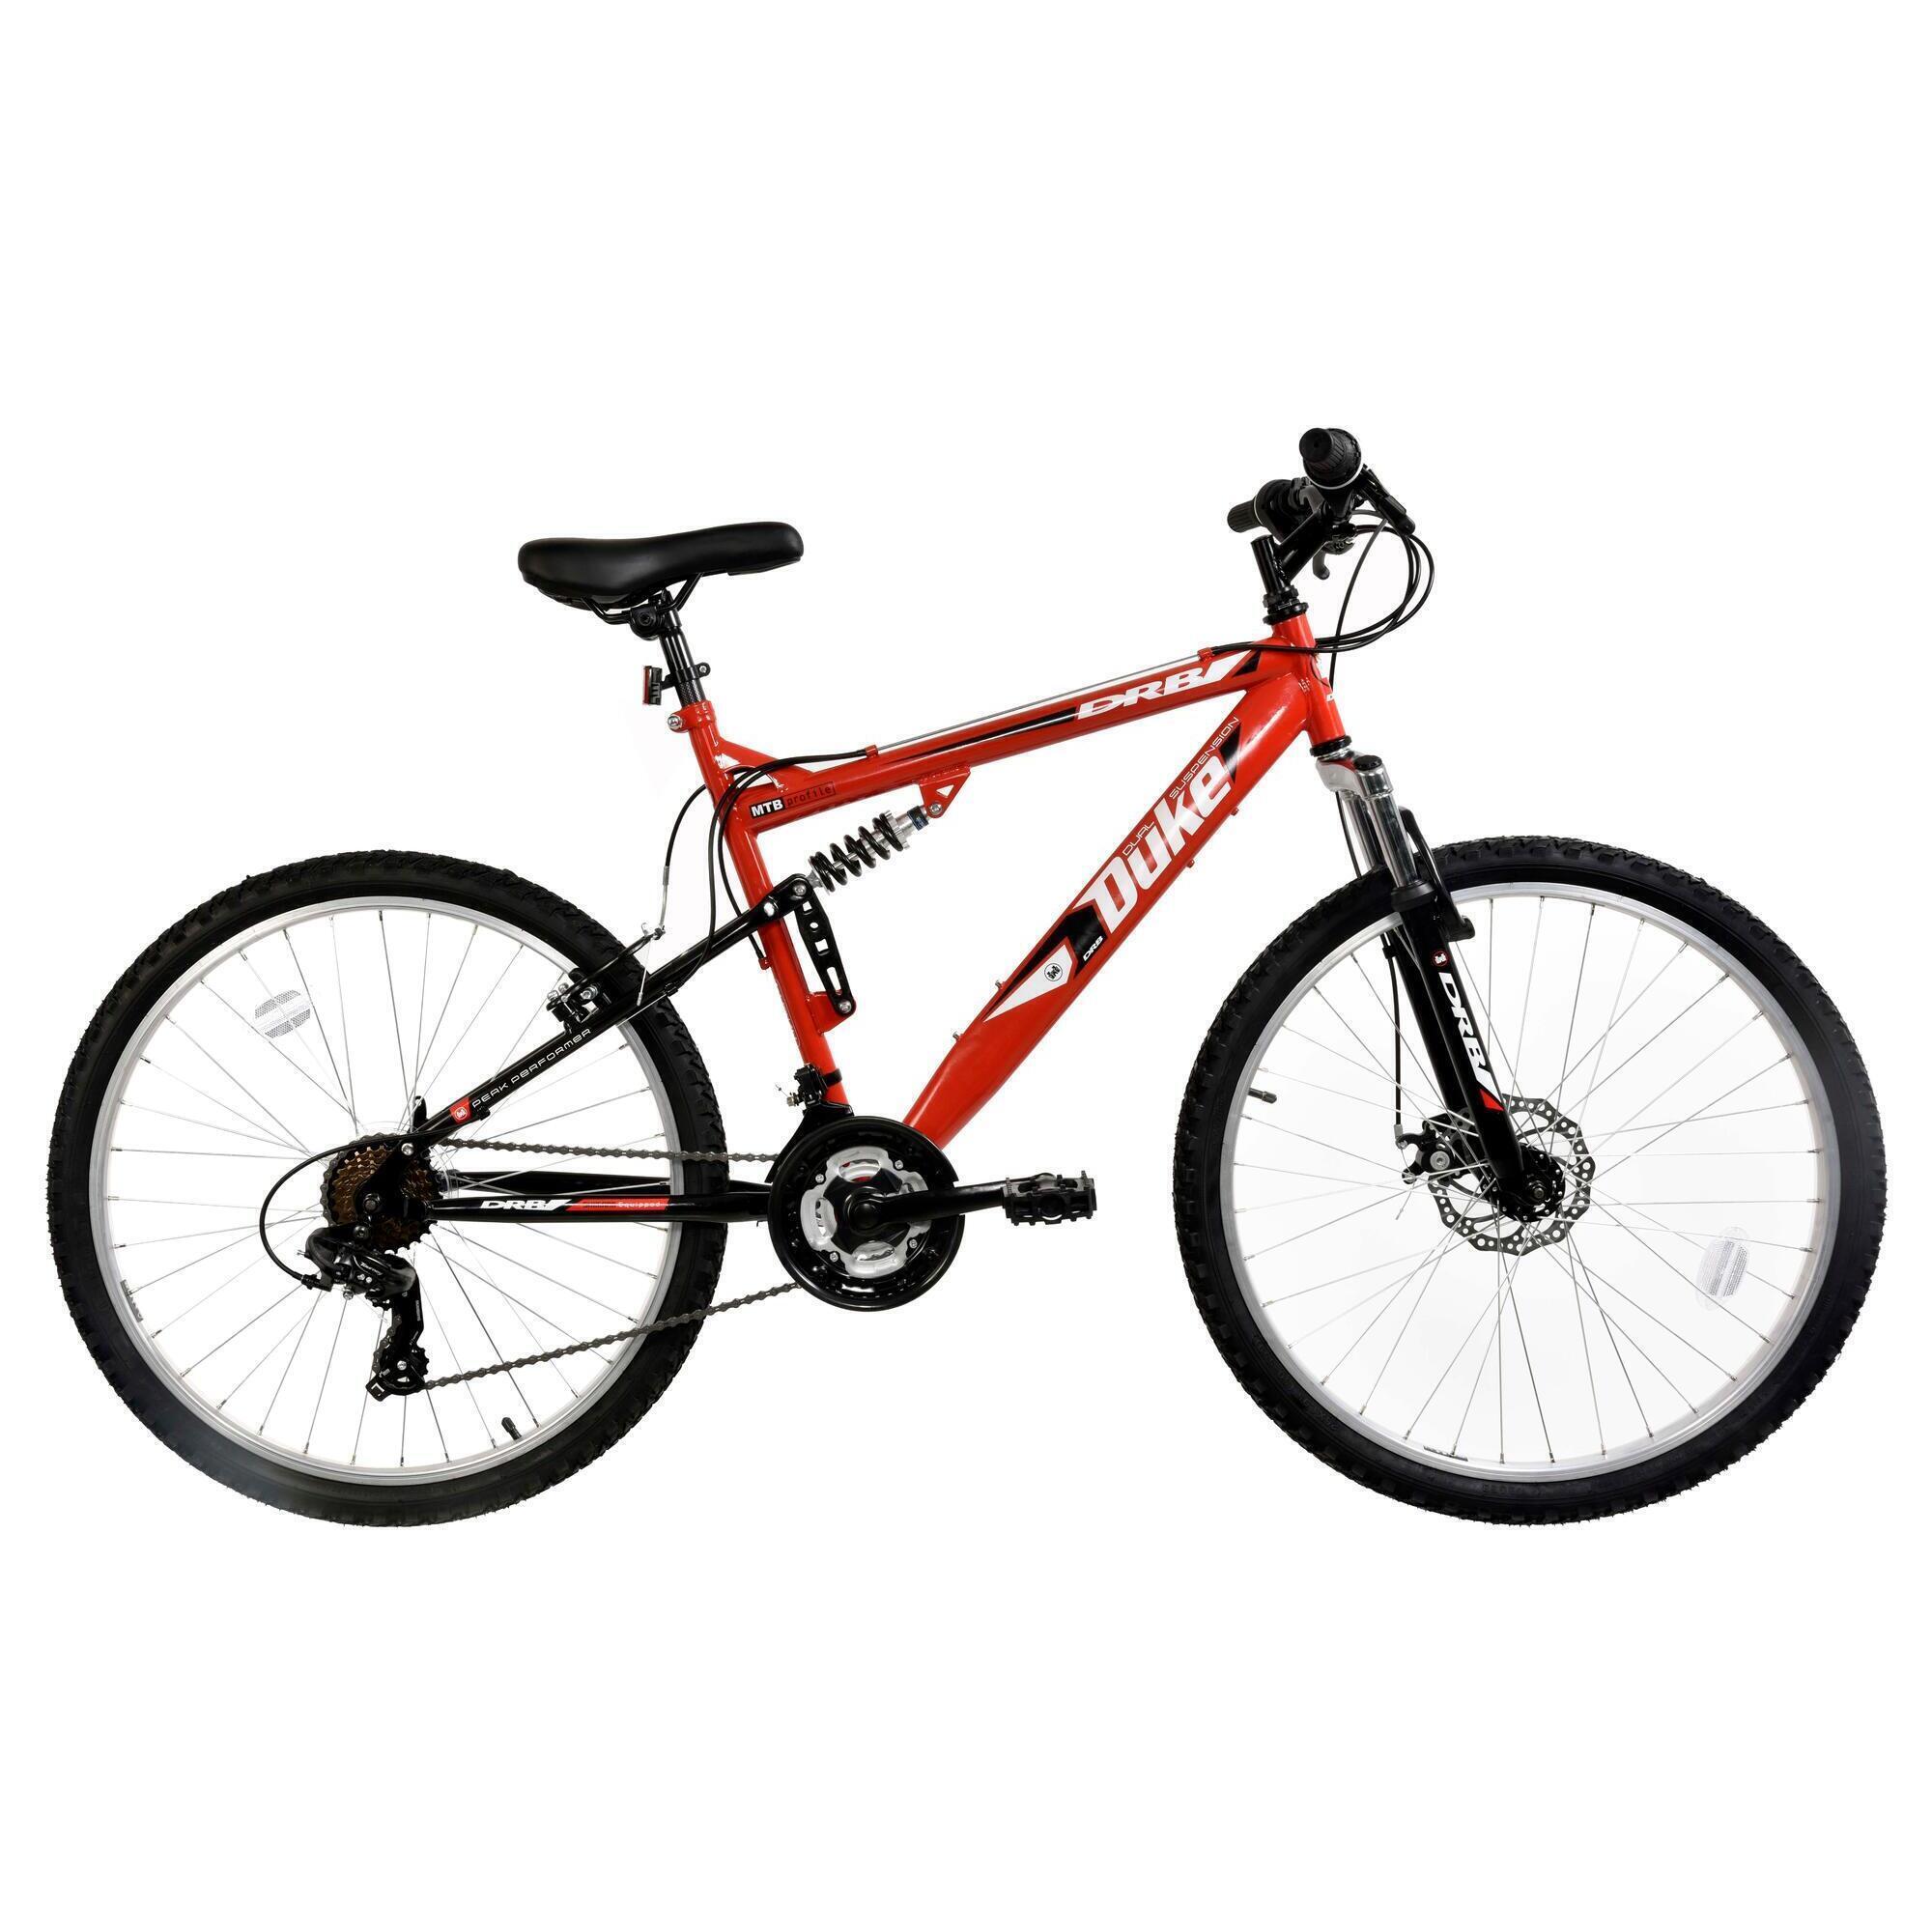 DALLINGRIDGE Dallingridge Duke Full Suspension Mountain Bike, 26" Wheel - Red/Black